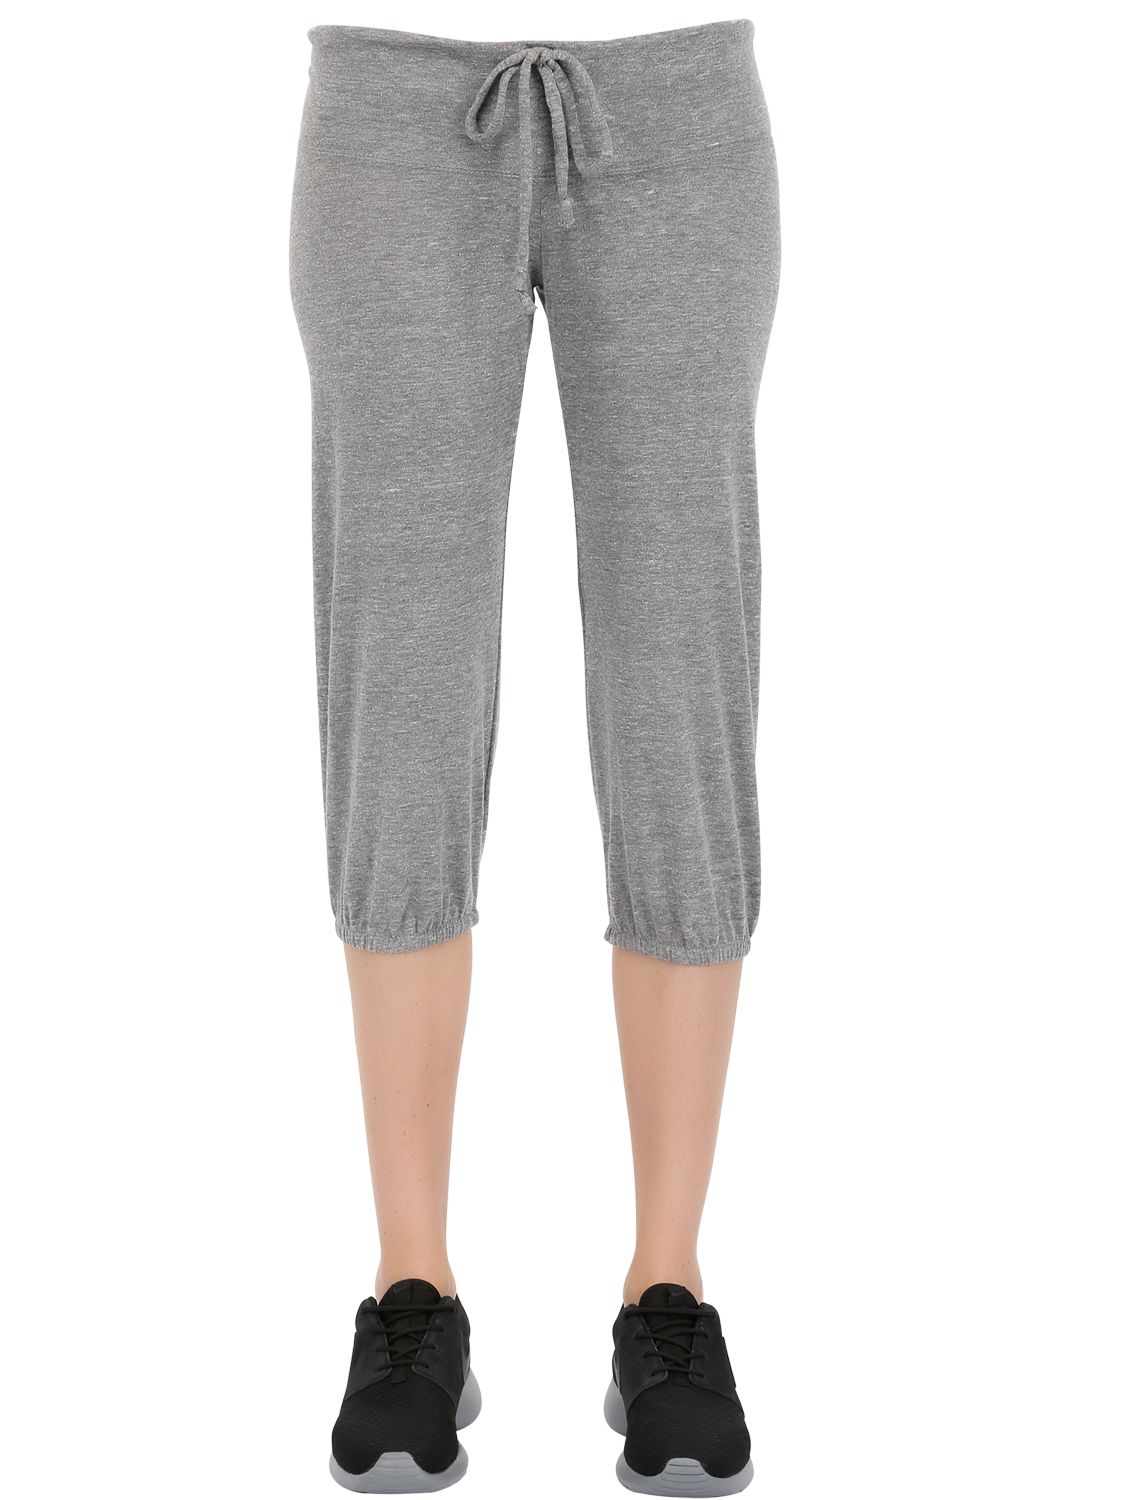 grey cotton yoga pants